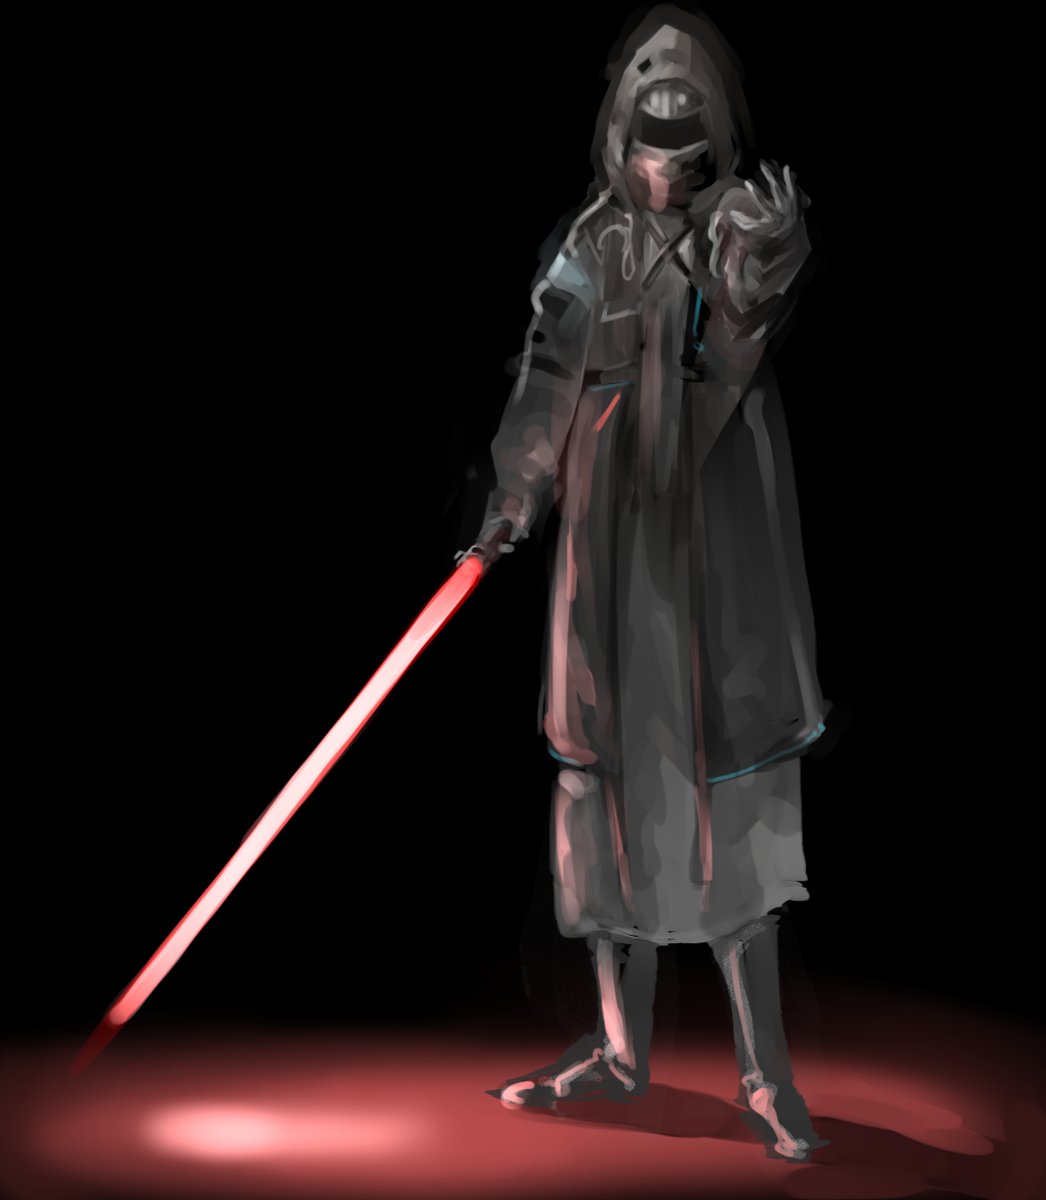 lightsaber energy sword weapon sword hood holding 1other  illustration images